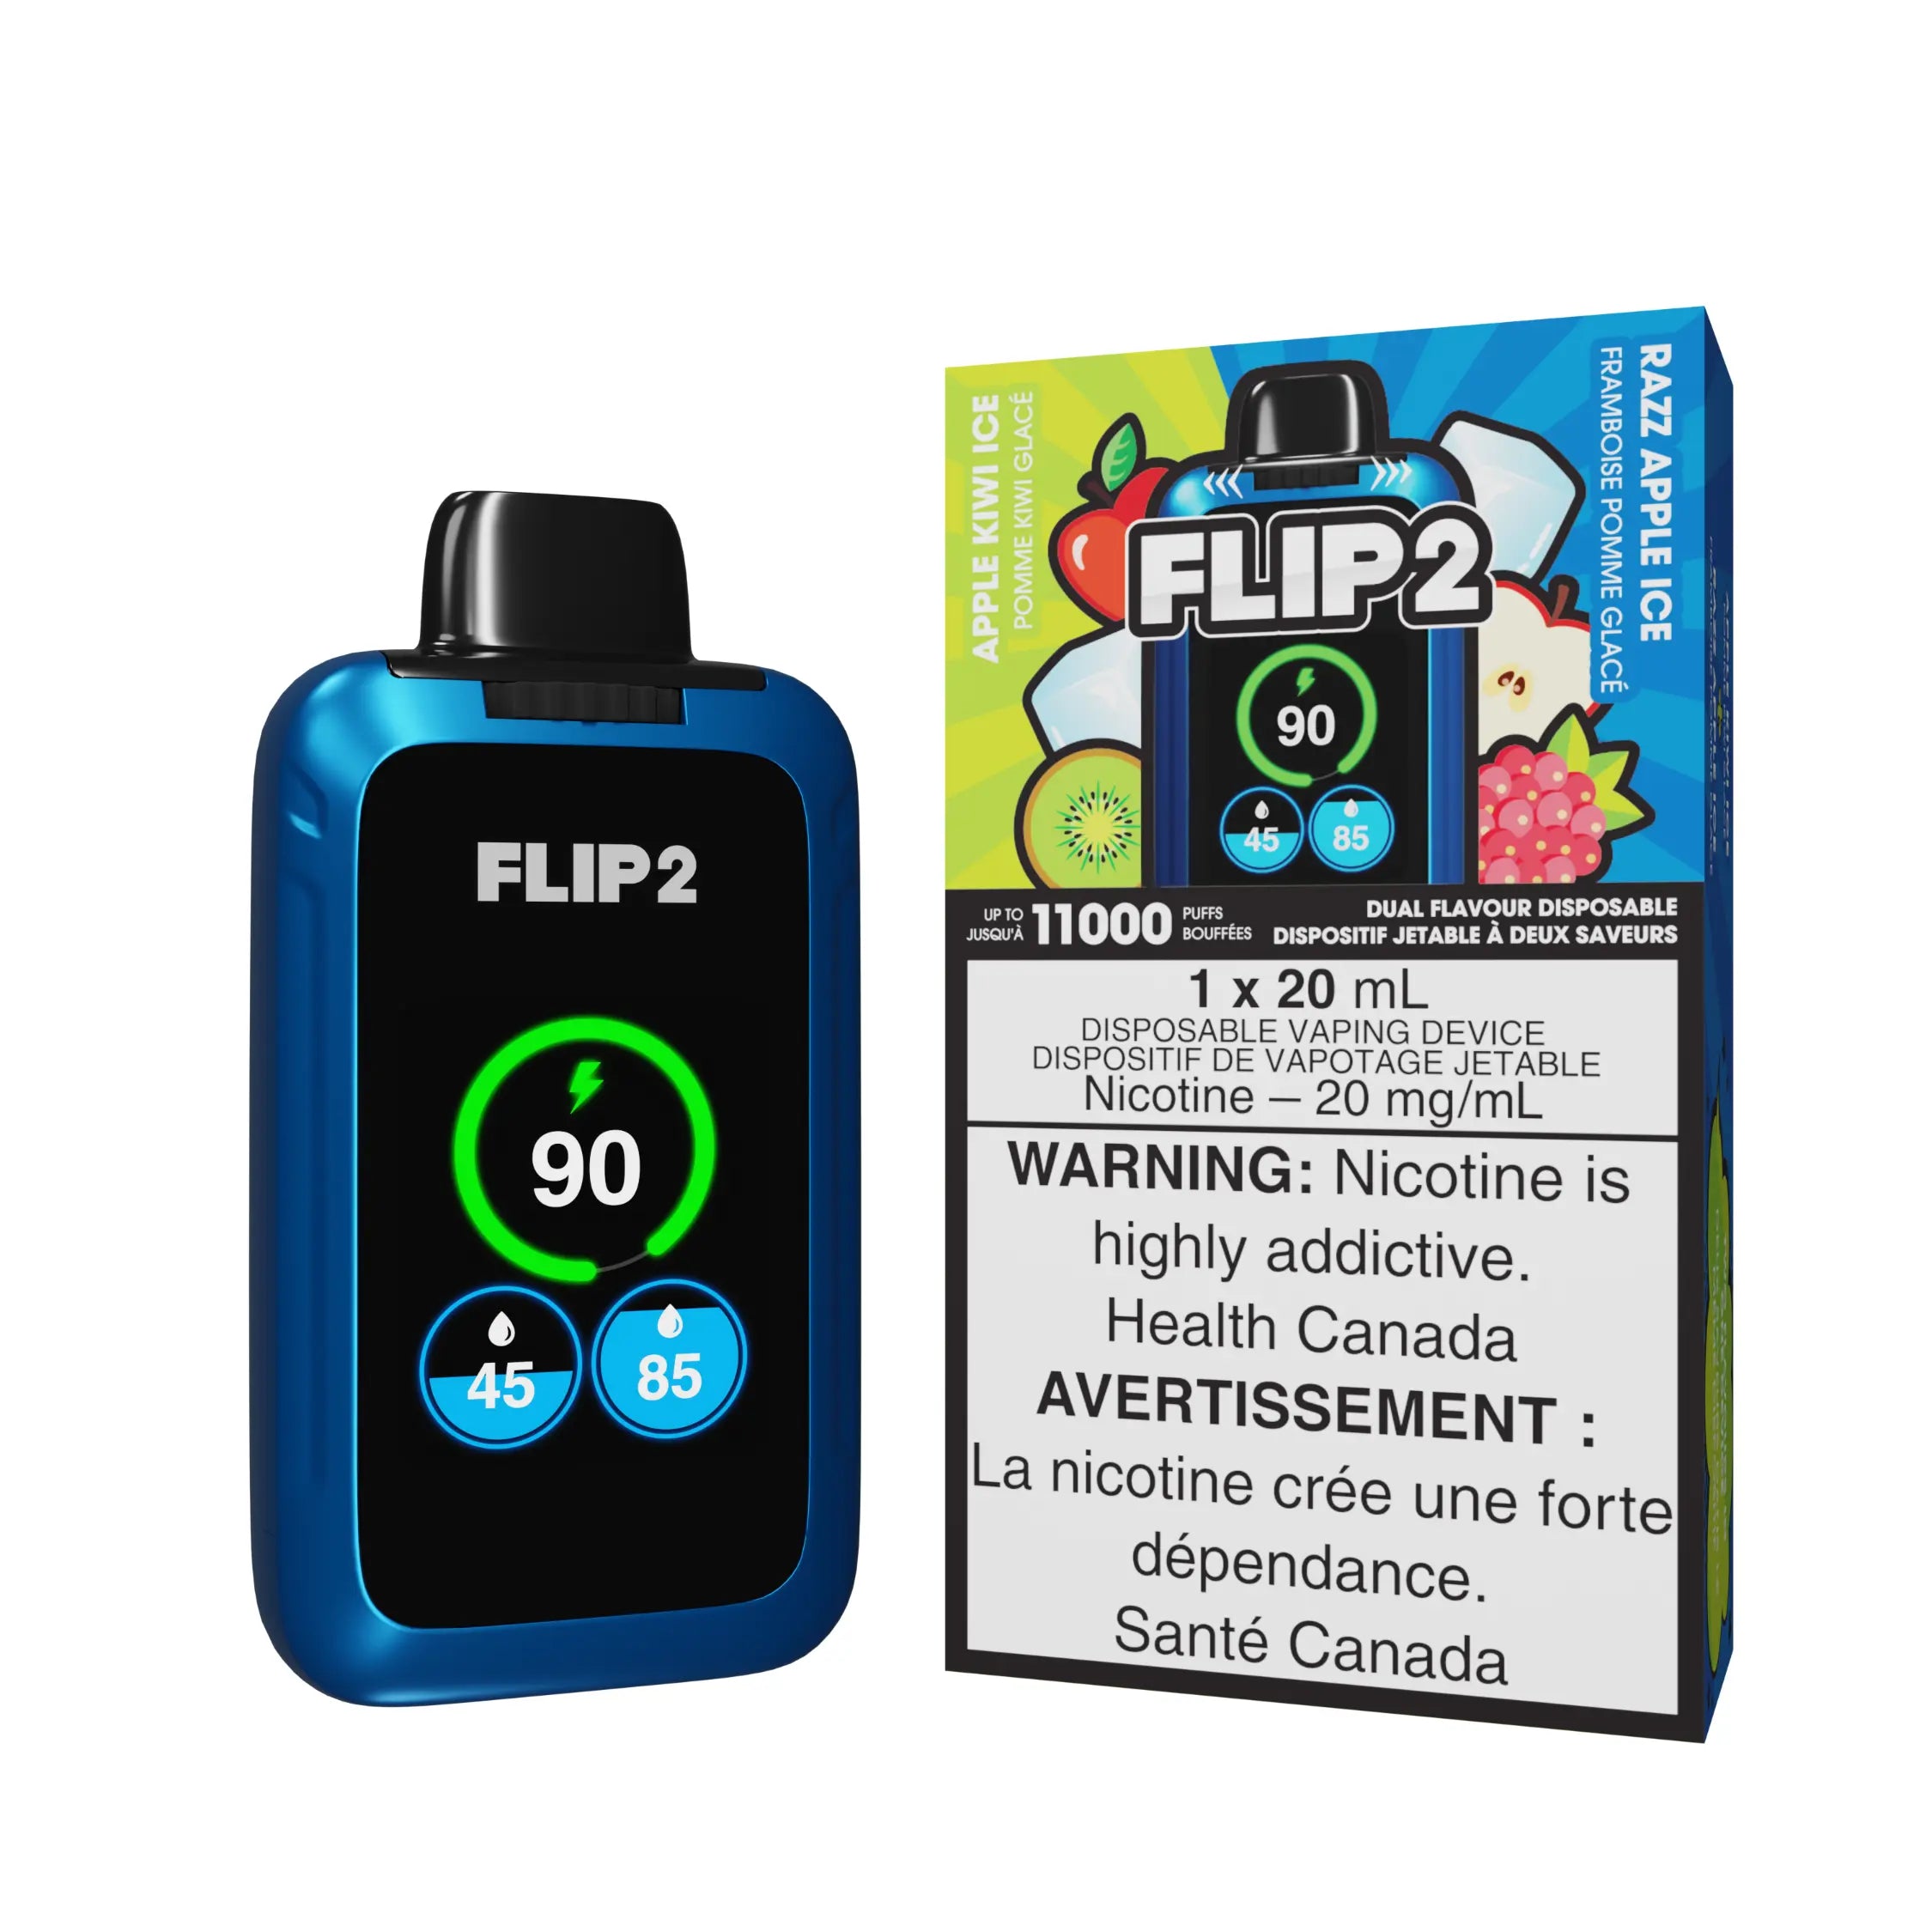 FLIP 2 Disposable Vape - up to 11000 Puffs